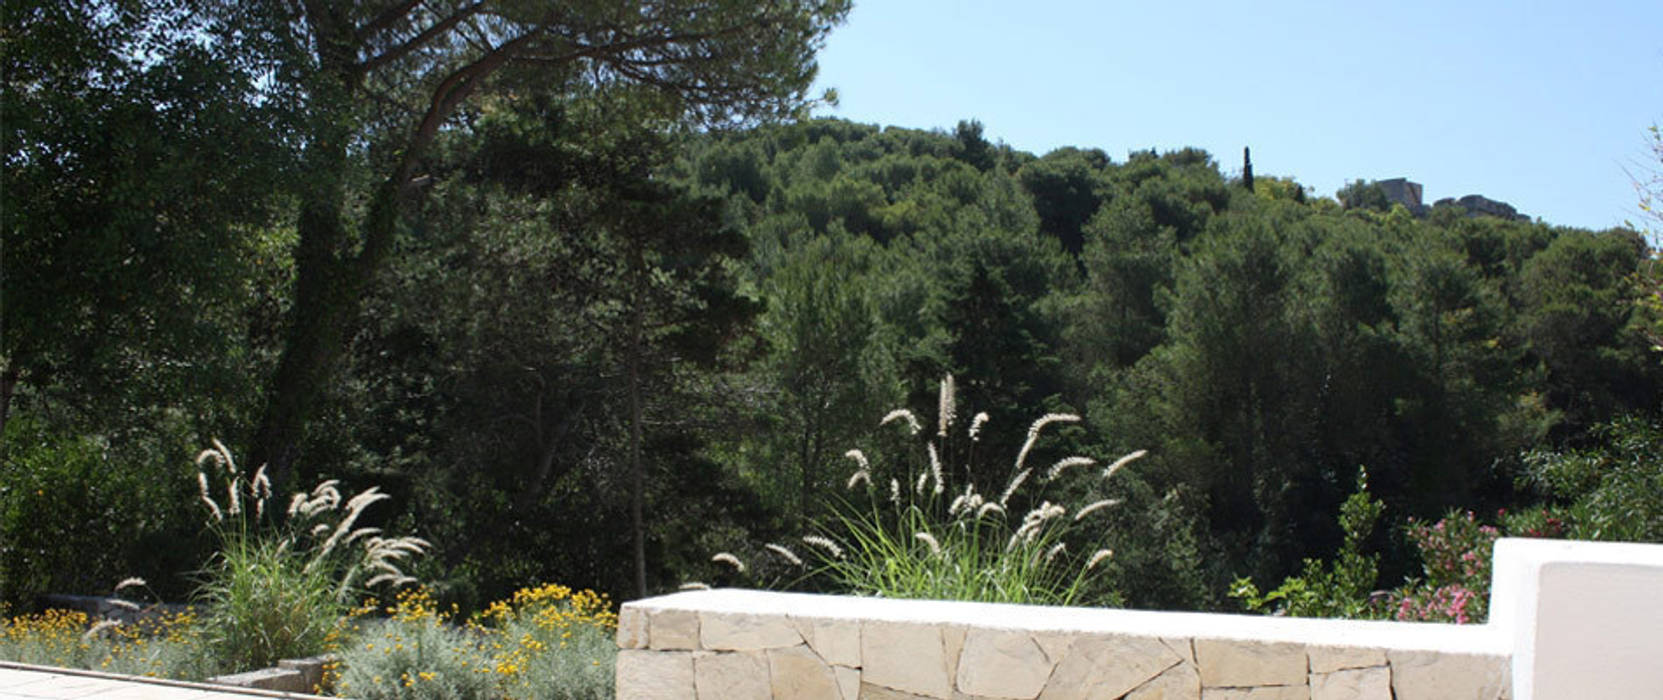 Il giardino dell'otium, otragiardini otragiardini Mediterranean style garden